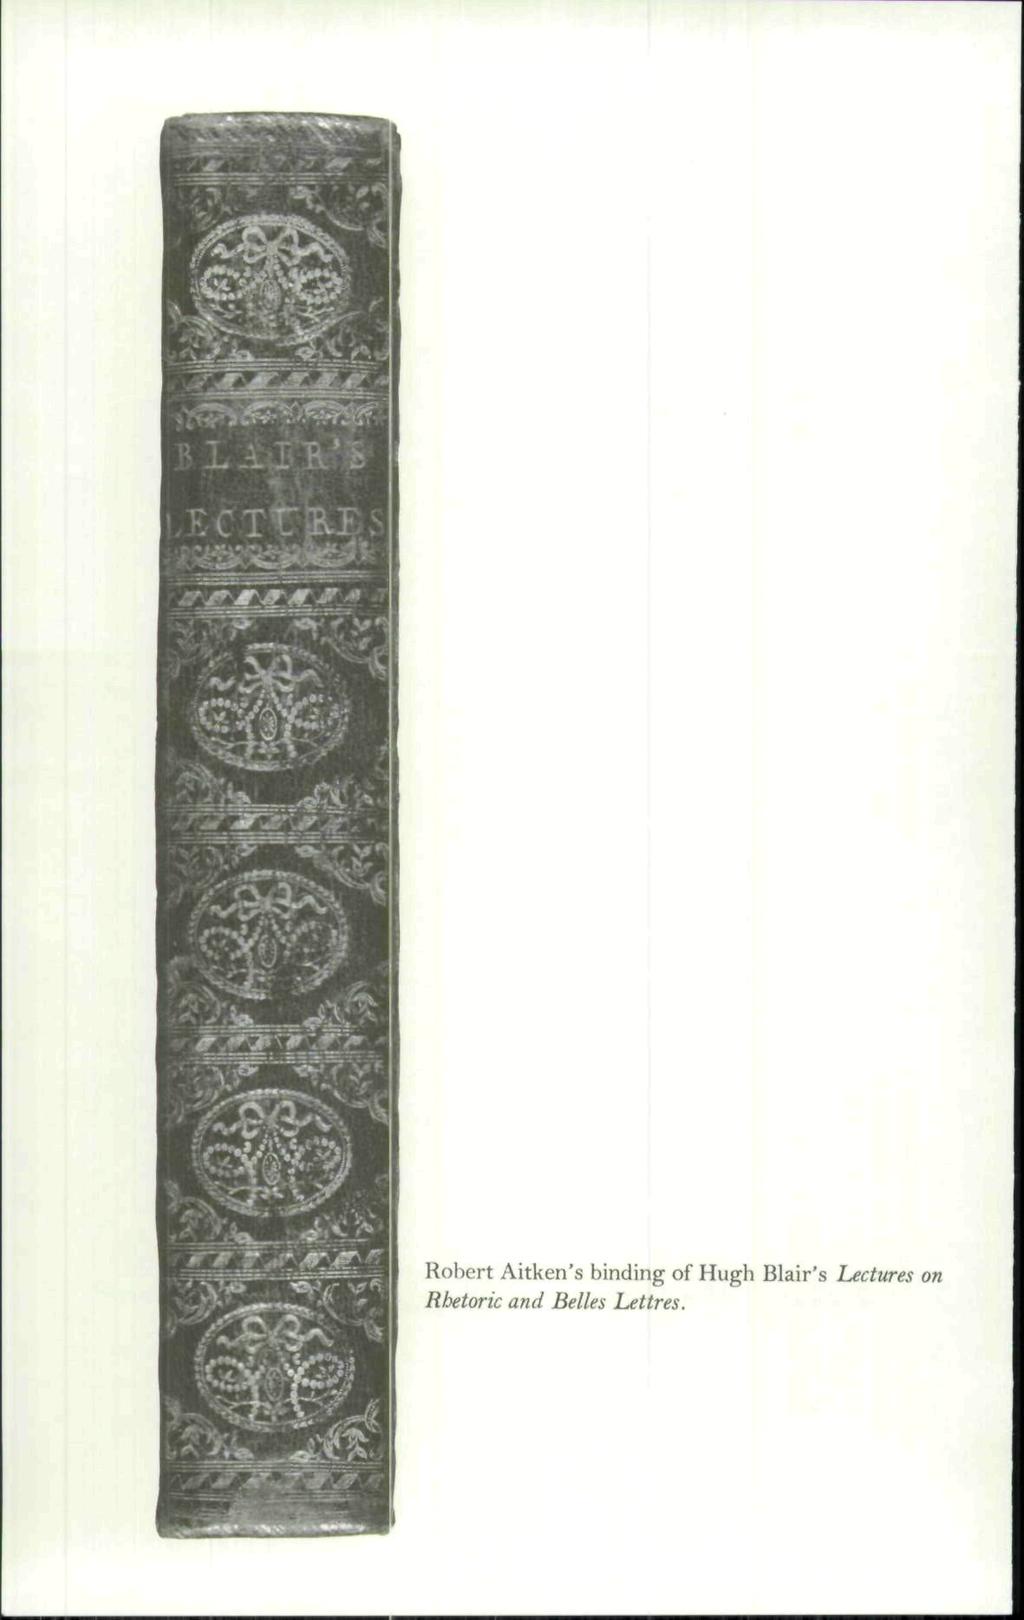 liohert Aitken's binding of Hugh Blair's